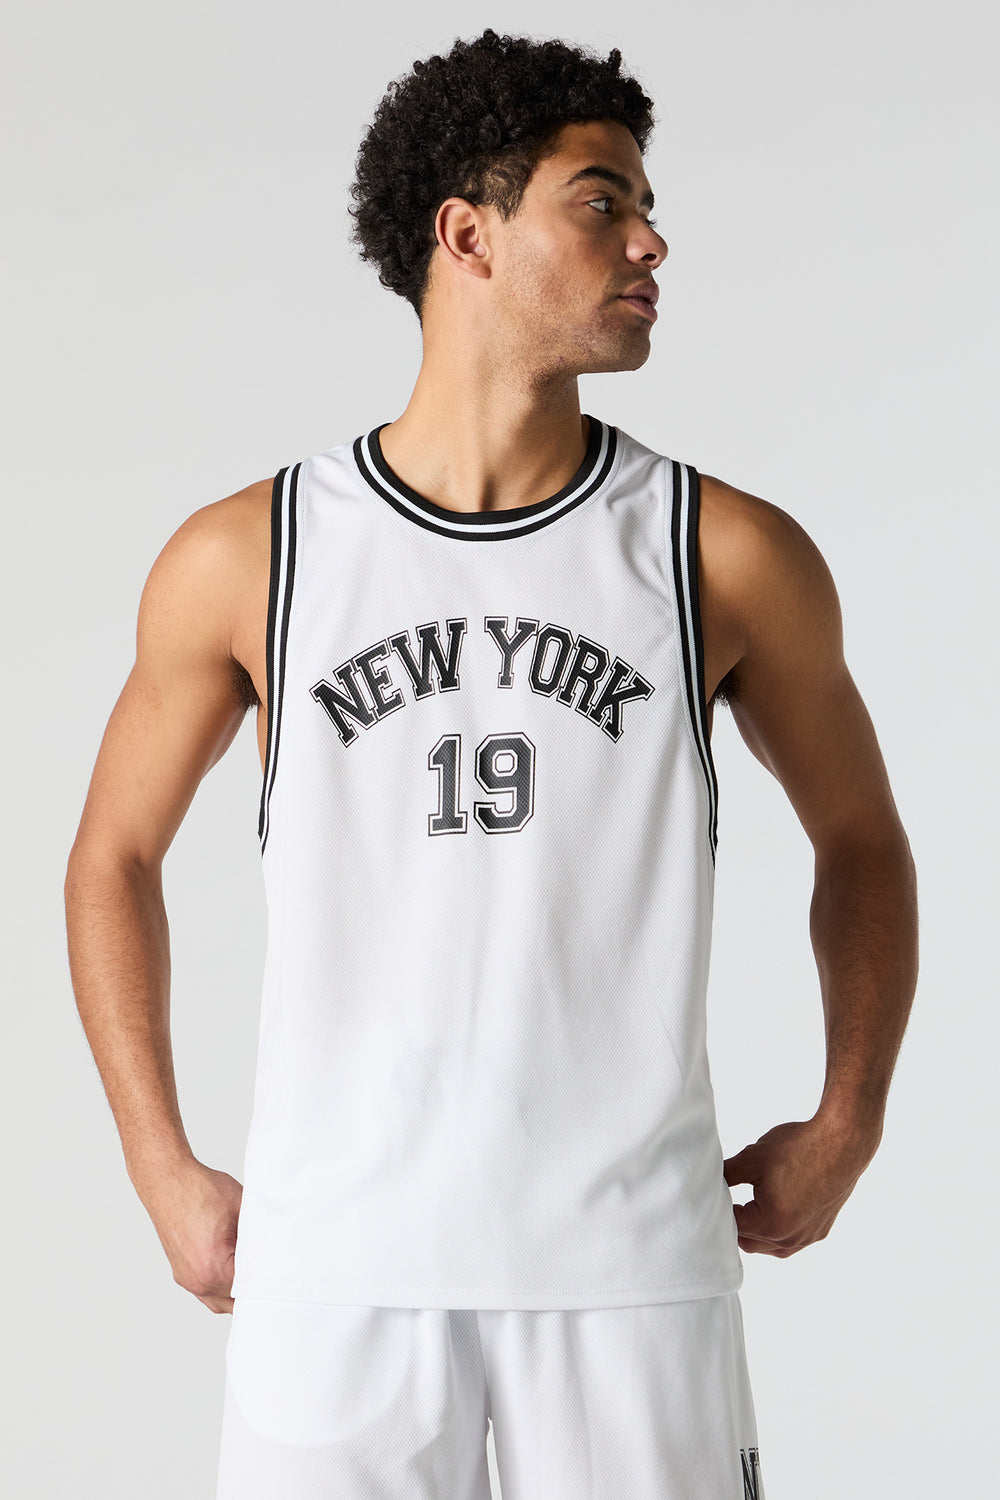 New York Graphic Mesh Basketball Jersey New York Graphic Mesh Basketball Jersey 1